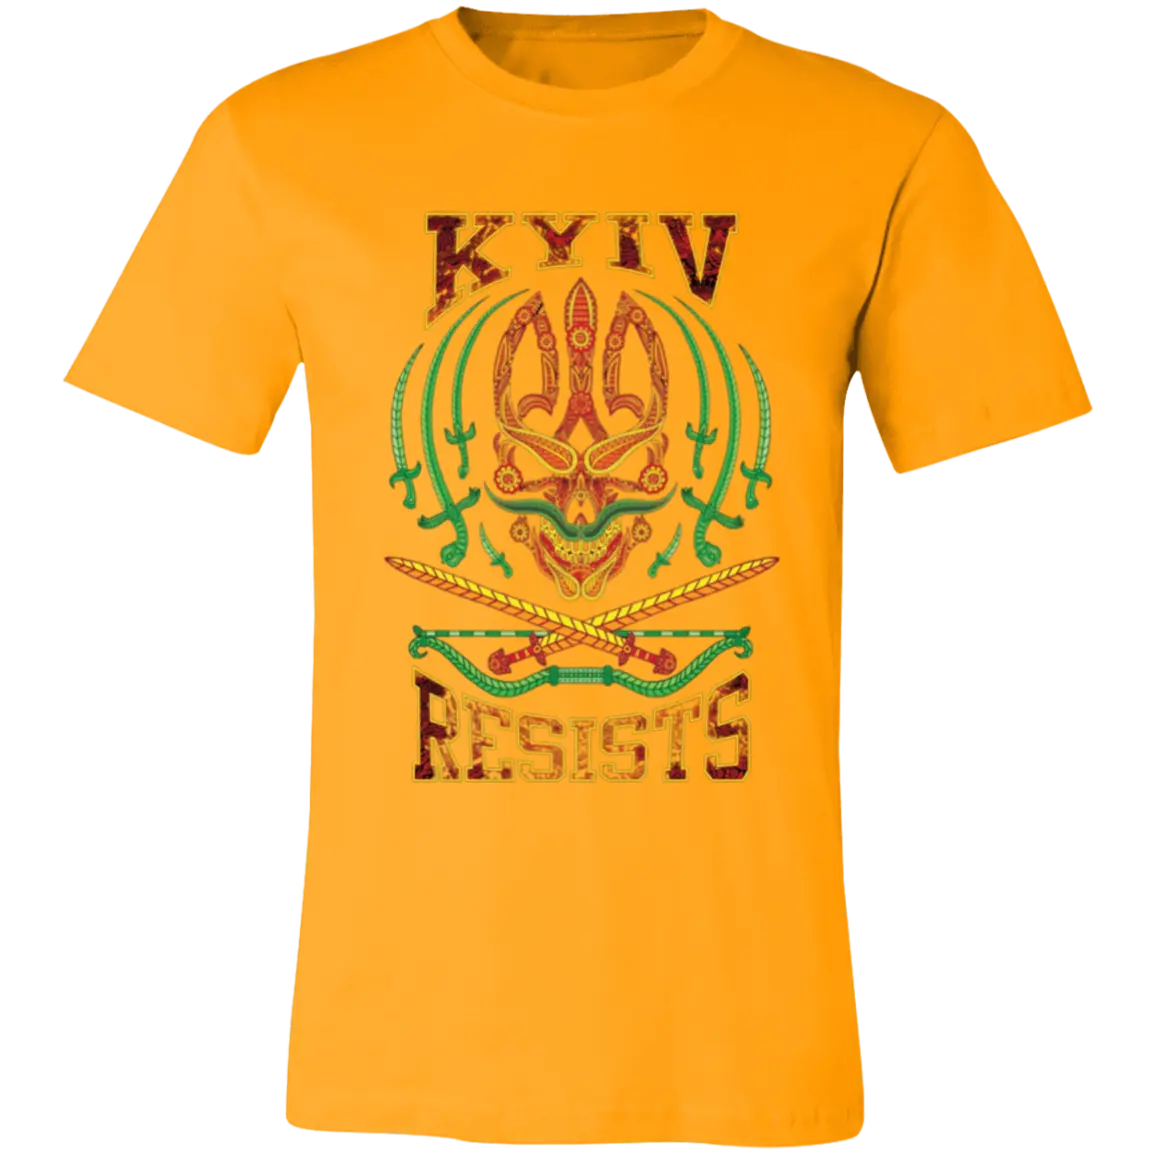 Kyiv Resists Jersey Short-Sleeve T-Shirt - T-Shirts Gold / M Real Domain Streetwear Real Domain Streetwear